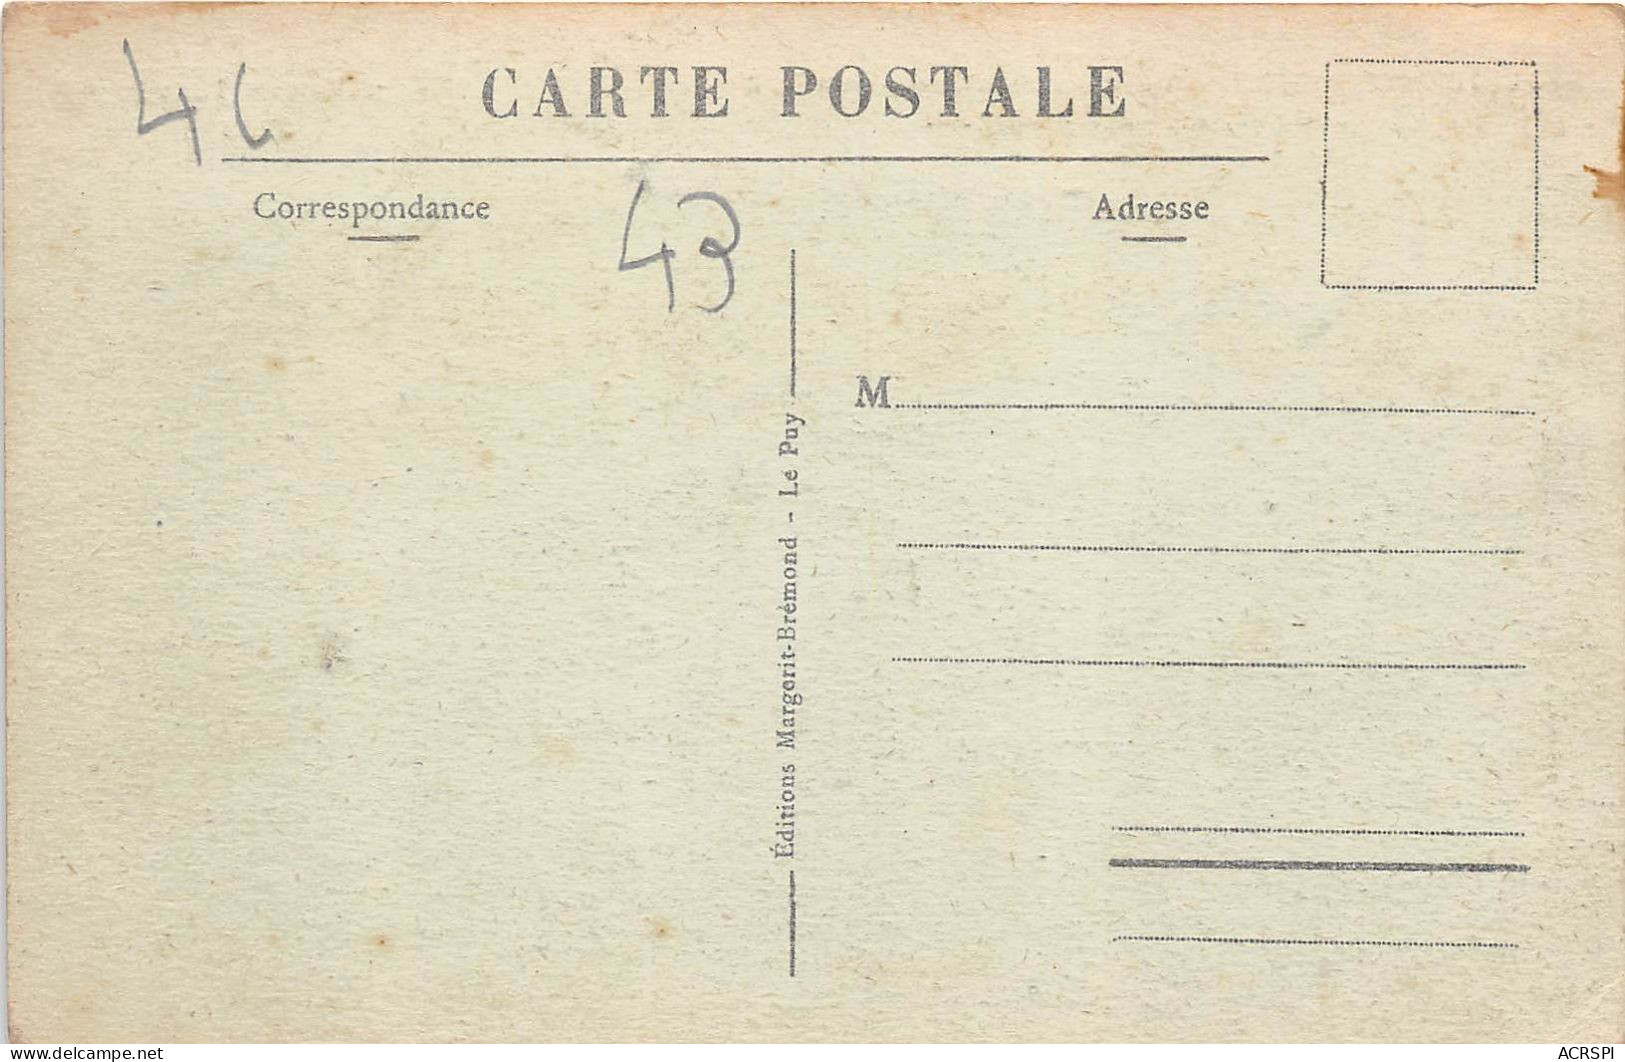 Saint Julien Chapteuil Vue Panoramique Belle Station D Air (scan Recto Verso ) Nono0025 - Other & Unclassified